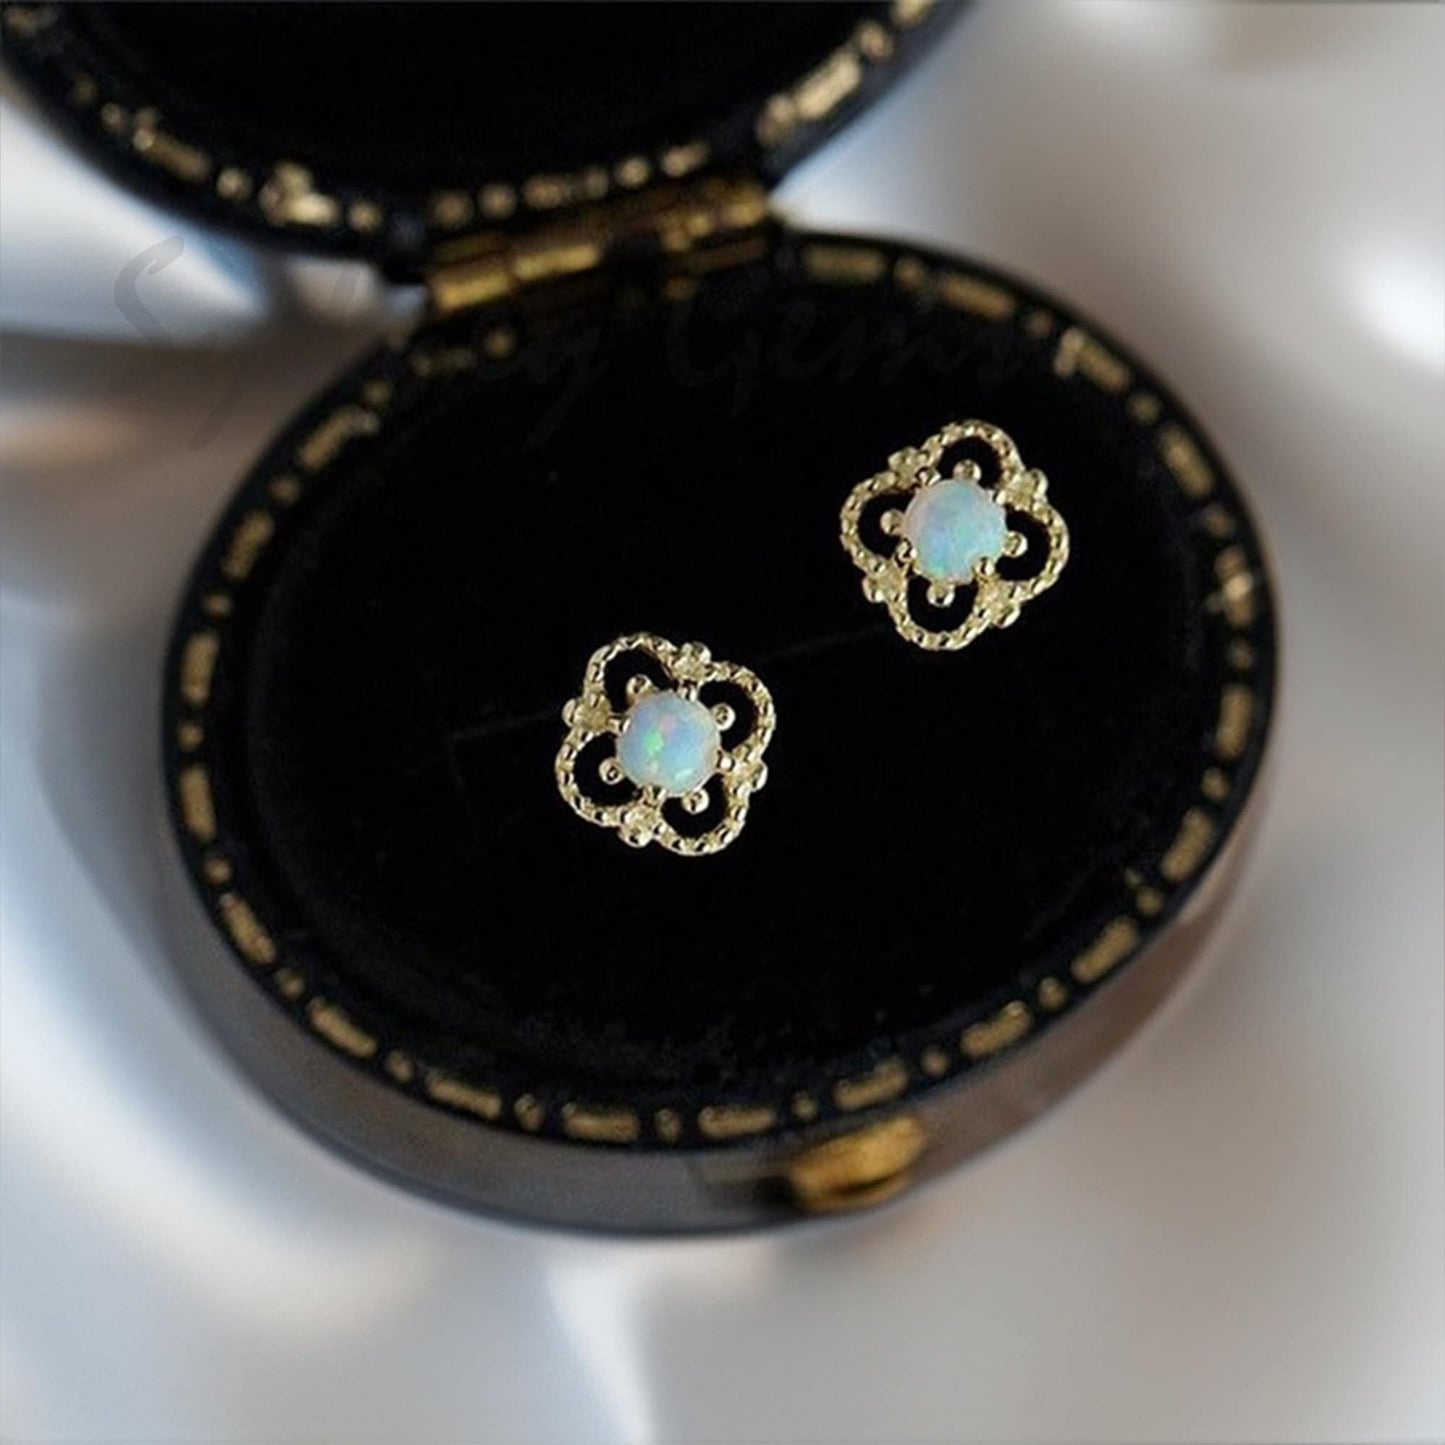 Gold/Silver Opal & Moonstone Stud Earrings, S925 Vintage Dainty Earrings, Tiny Gemstone Studs for Women, Shiny Vintage, Elegant Jewelry Gift